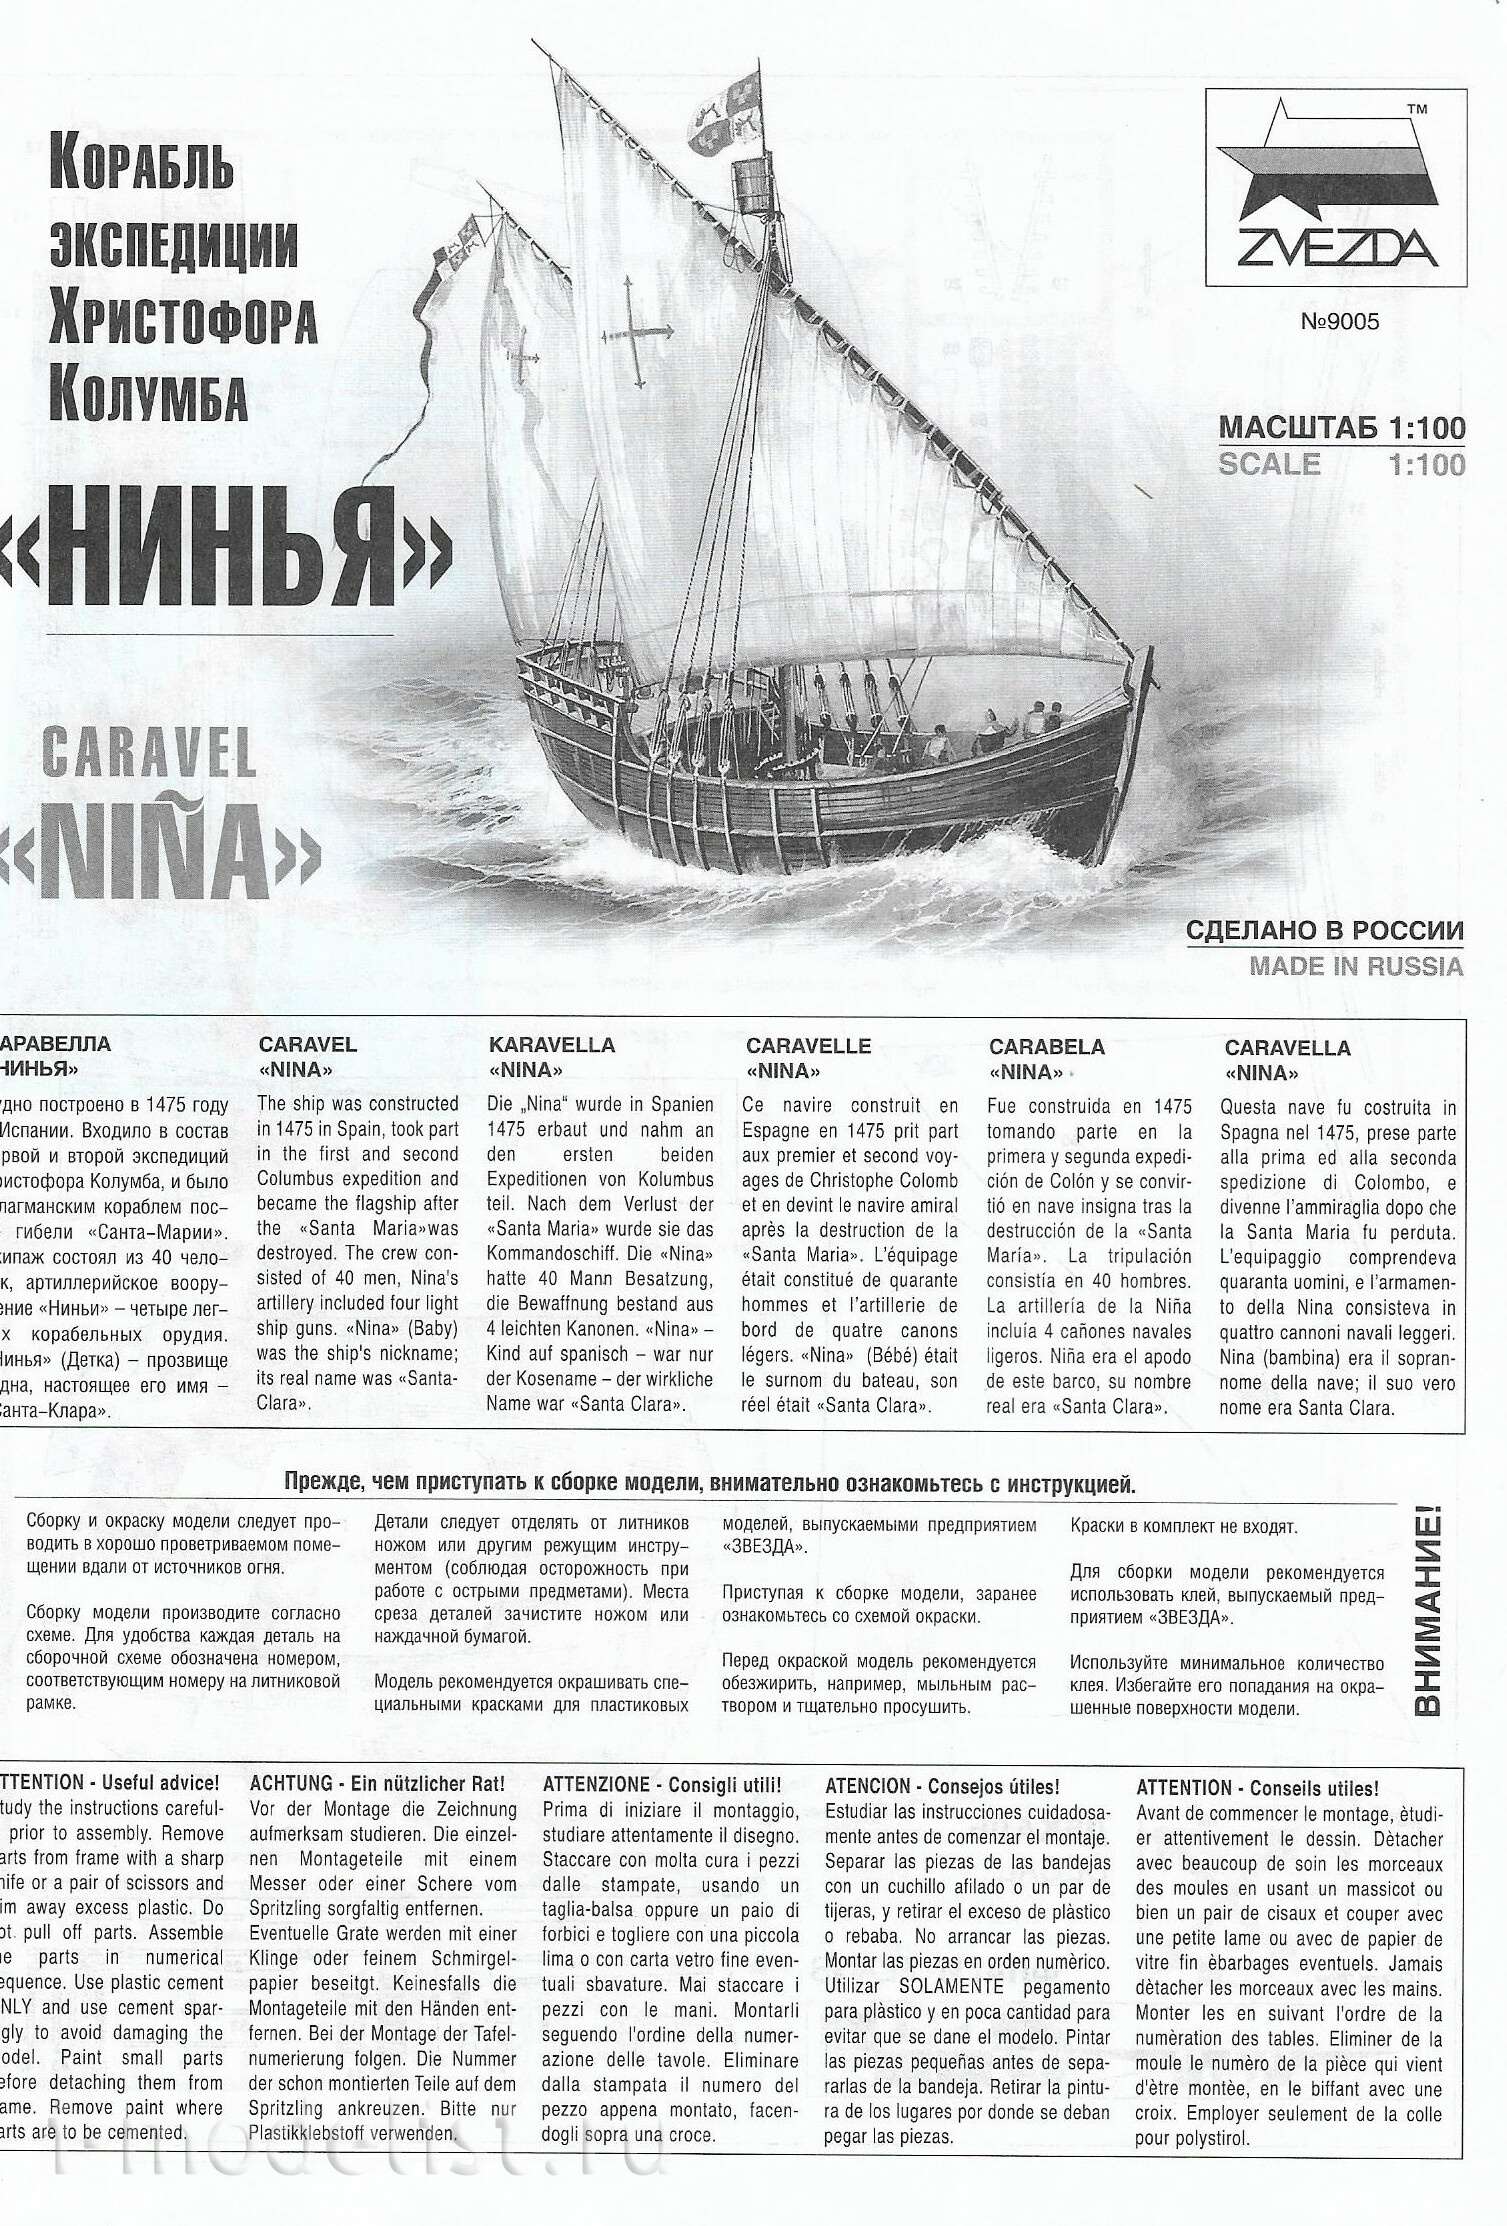 9005 Zvezda 1/100 Christopher Columbus Expedition ship “Ninya”